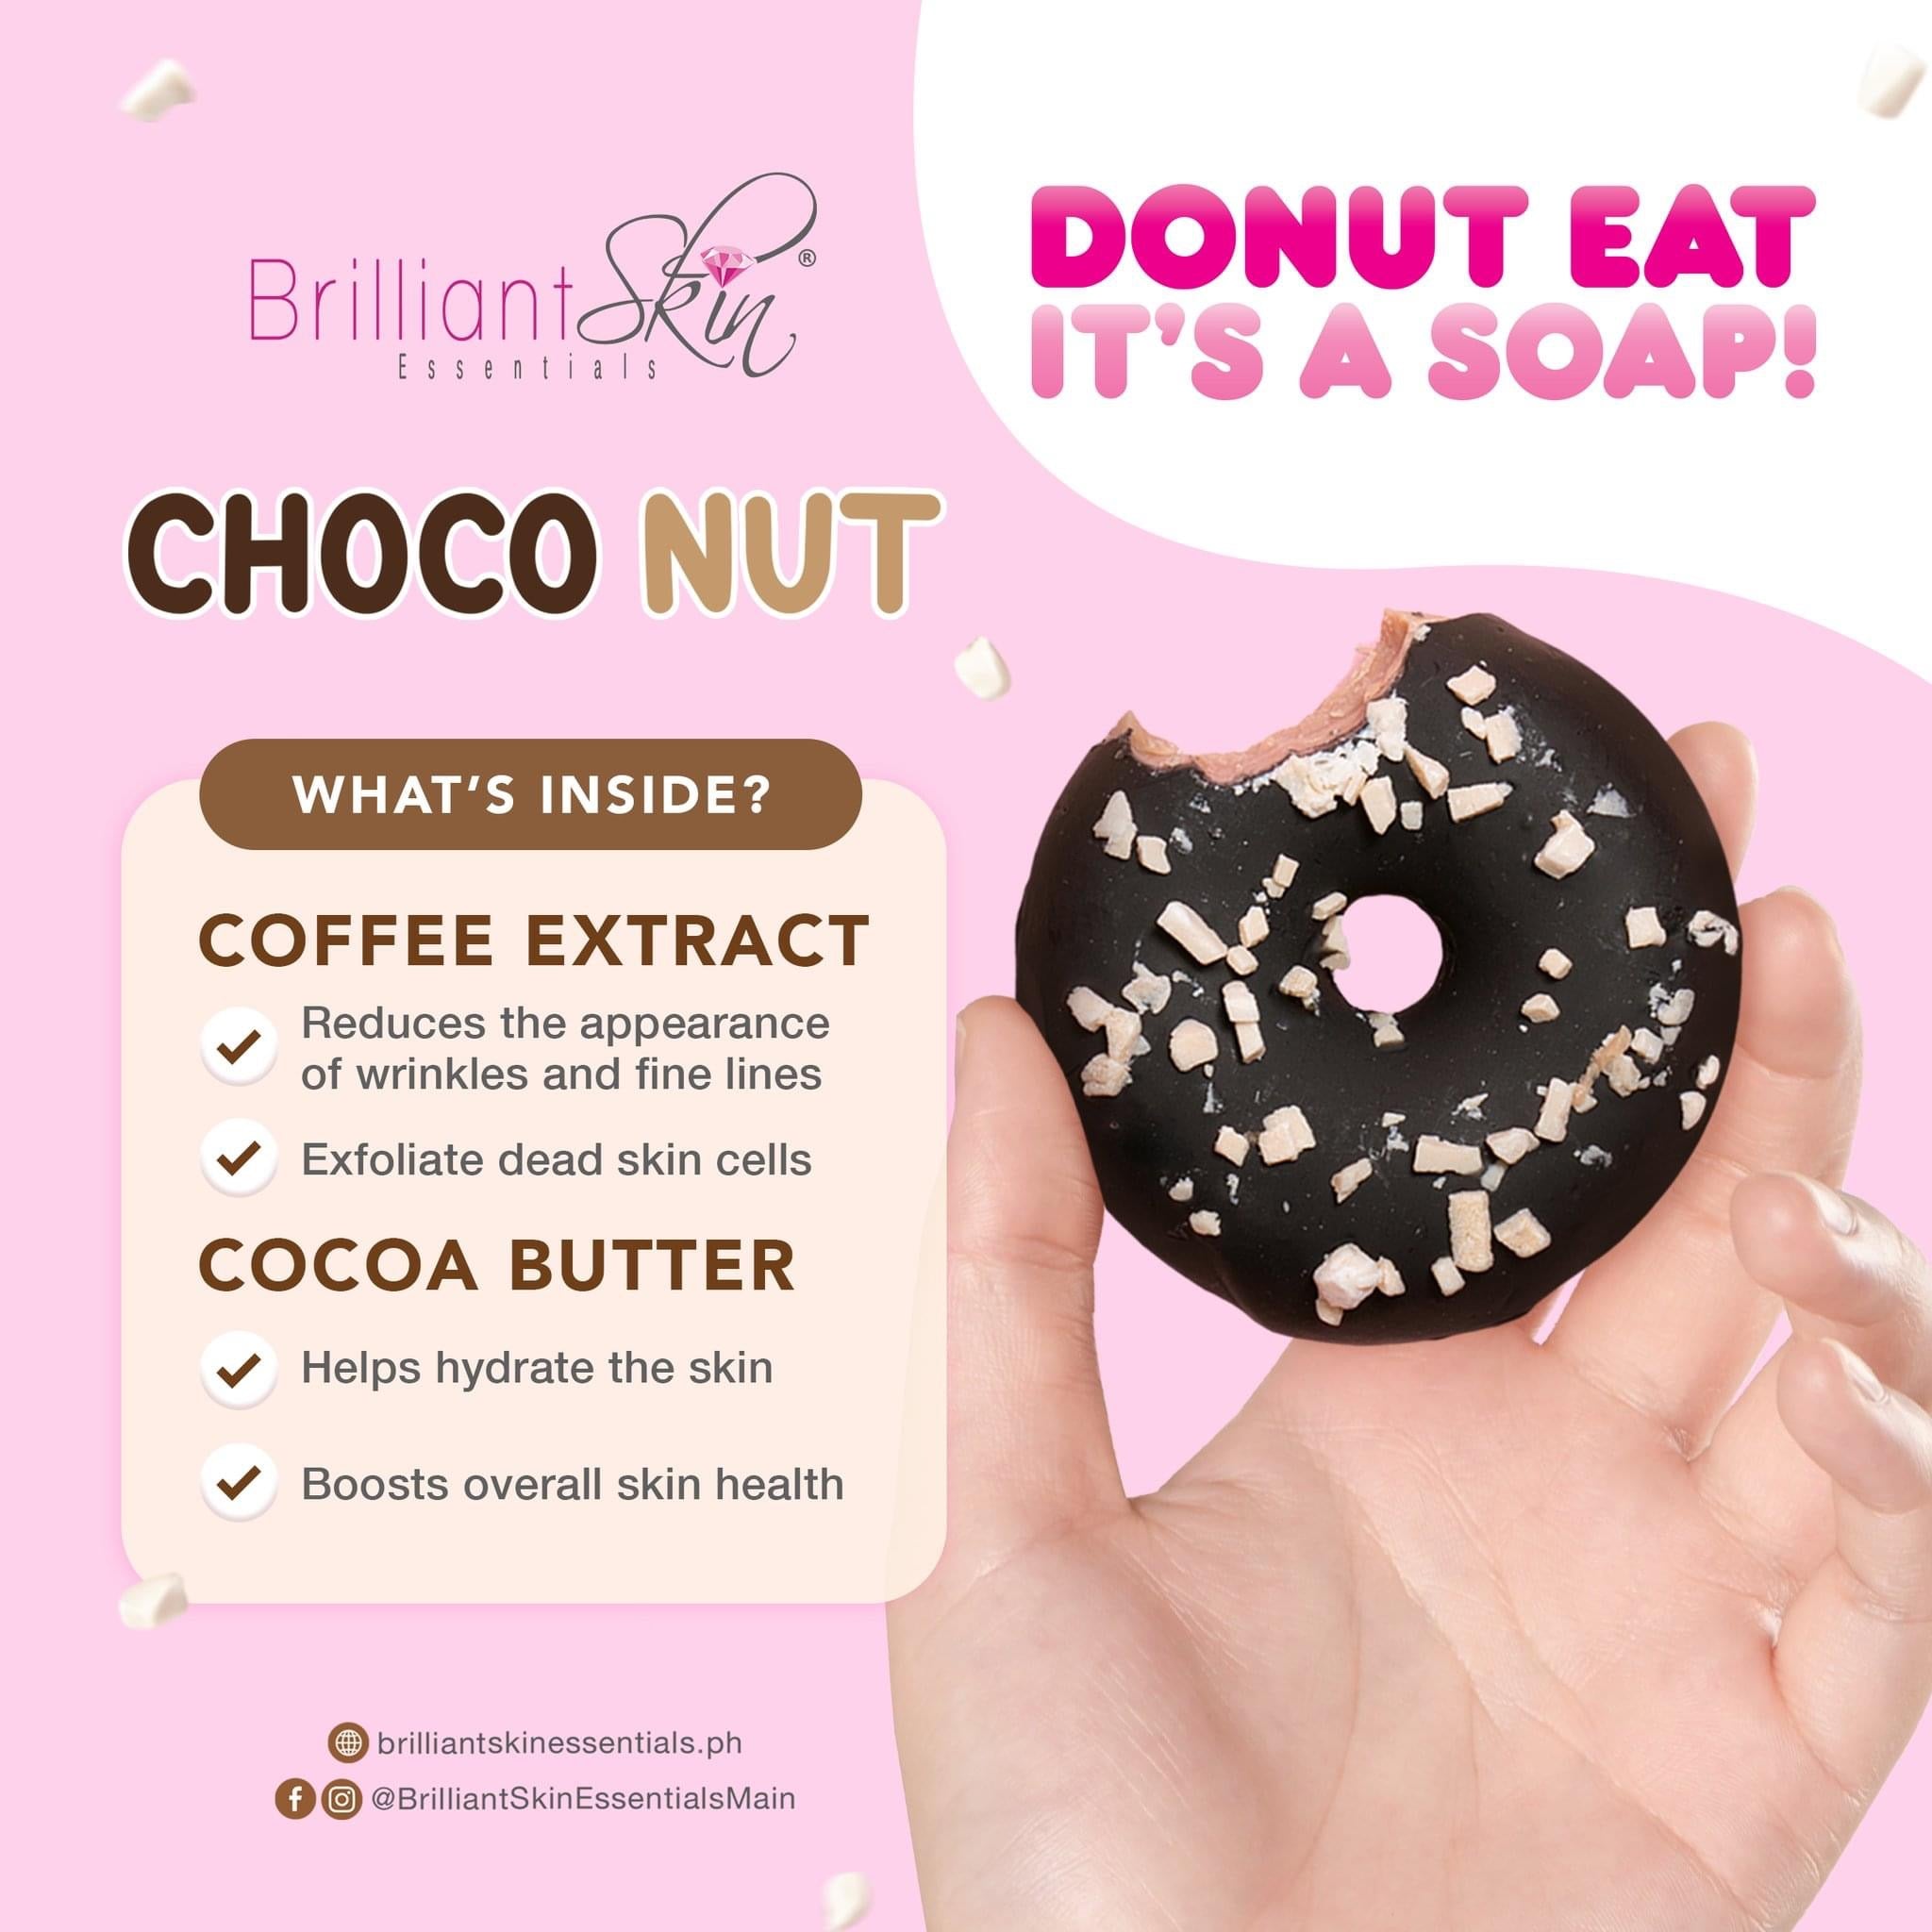 Brilliant Skin Essentials Donut Eat it’s a Soap - True Beauty Skin Essentials